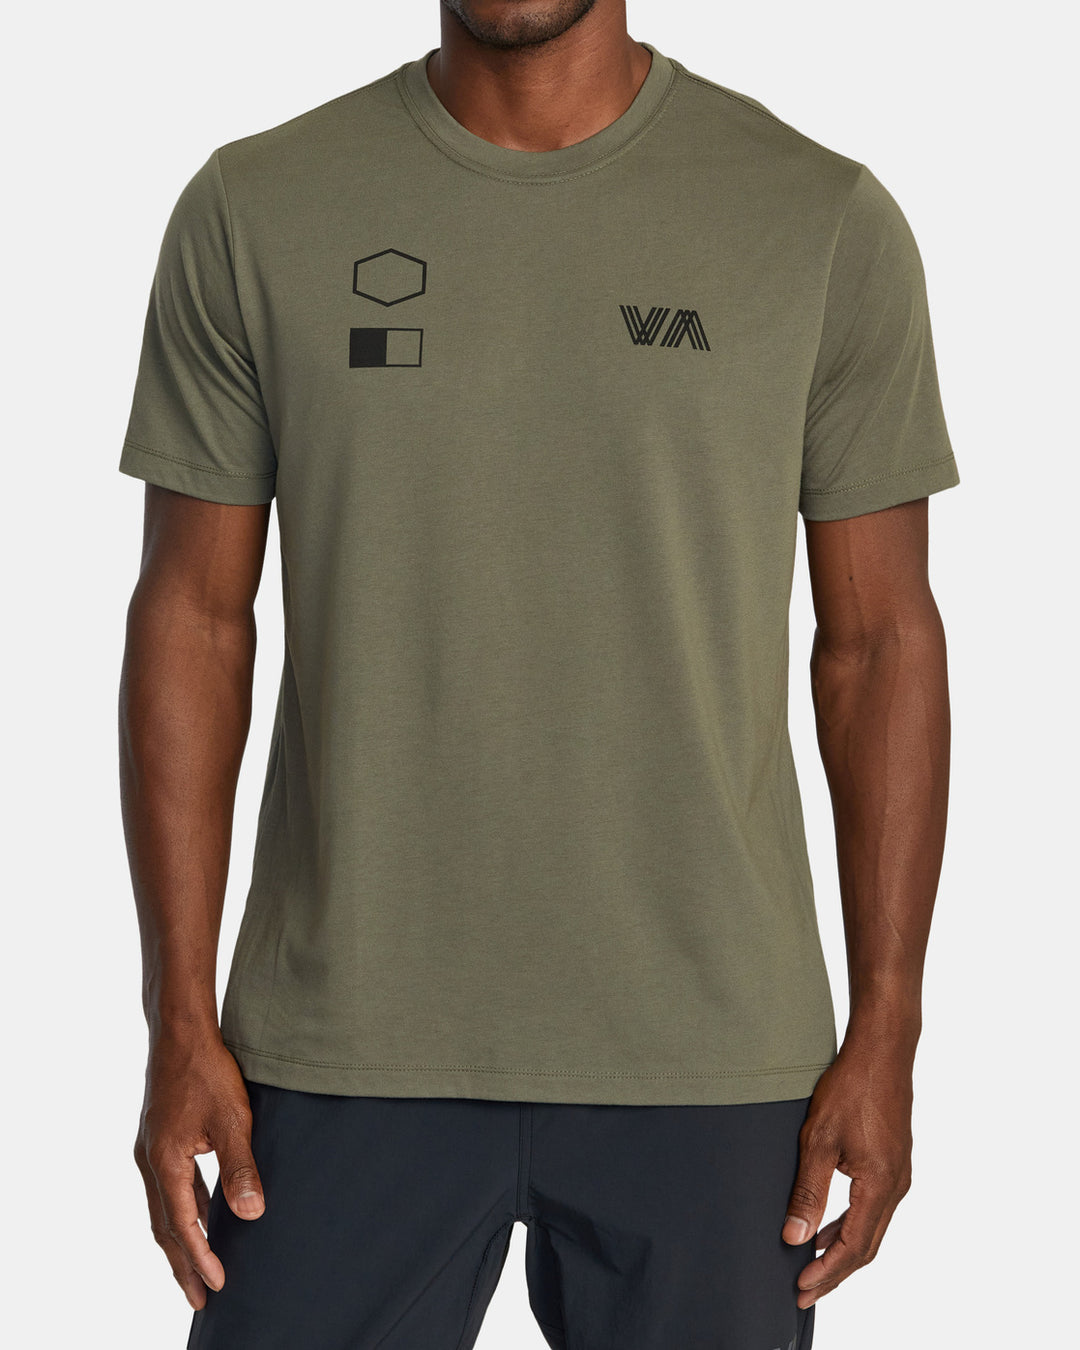 RVCA Copy T-Shirt - Olive - Sun Diego Boardshop